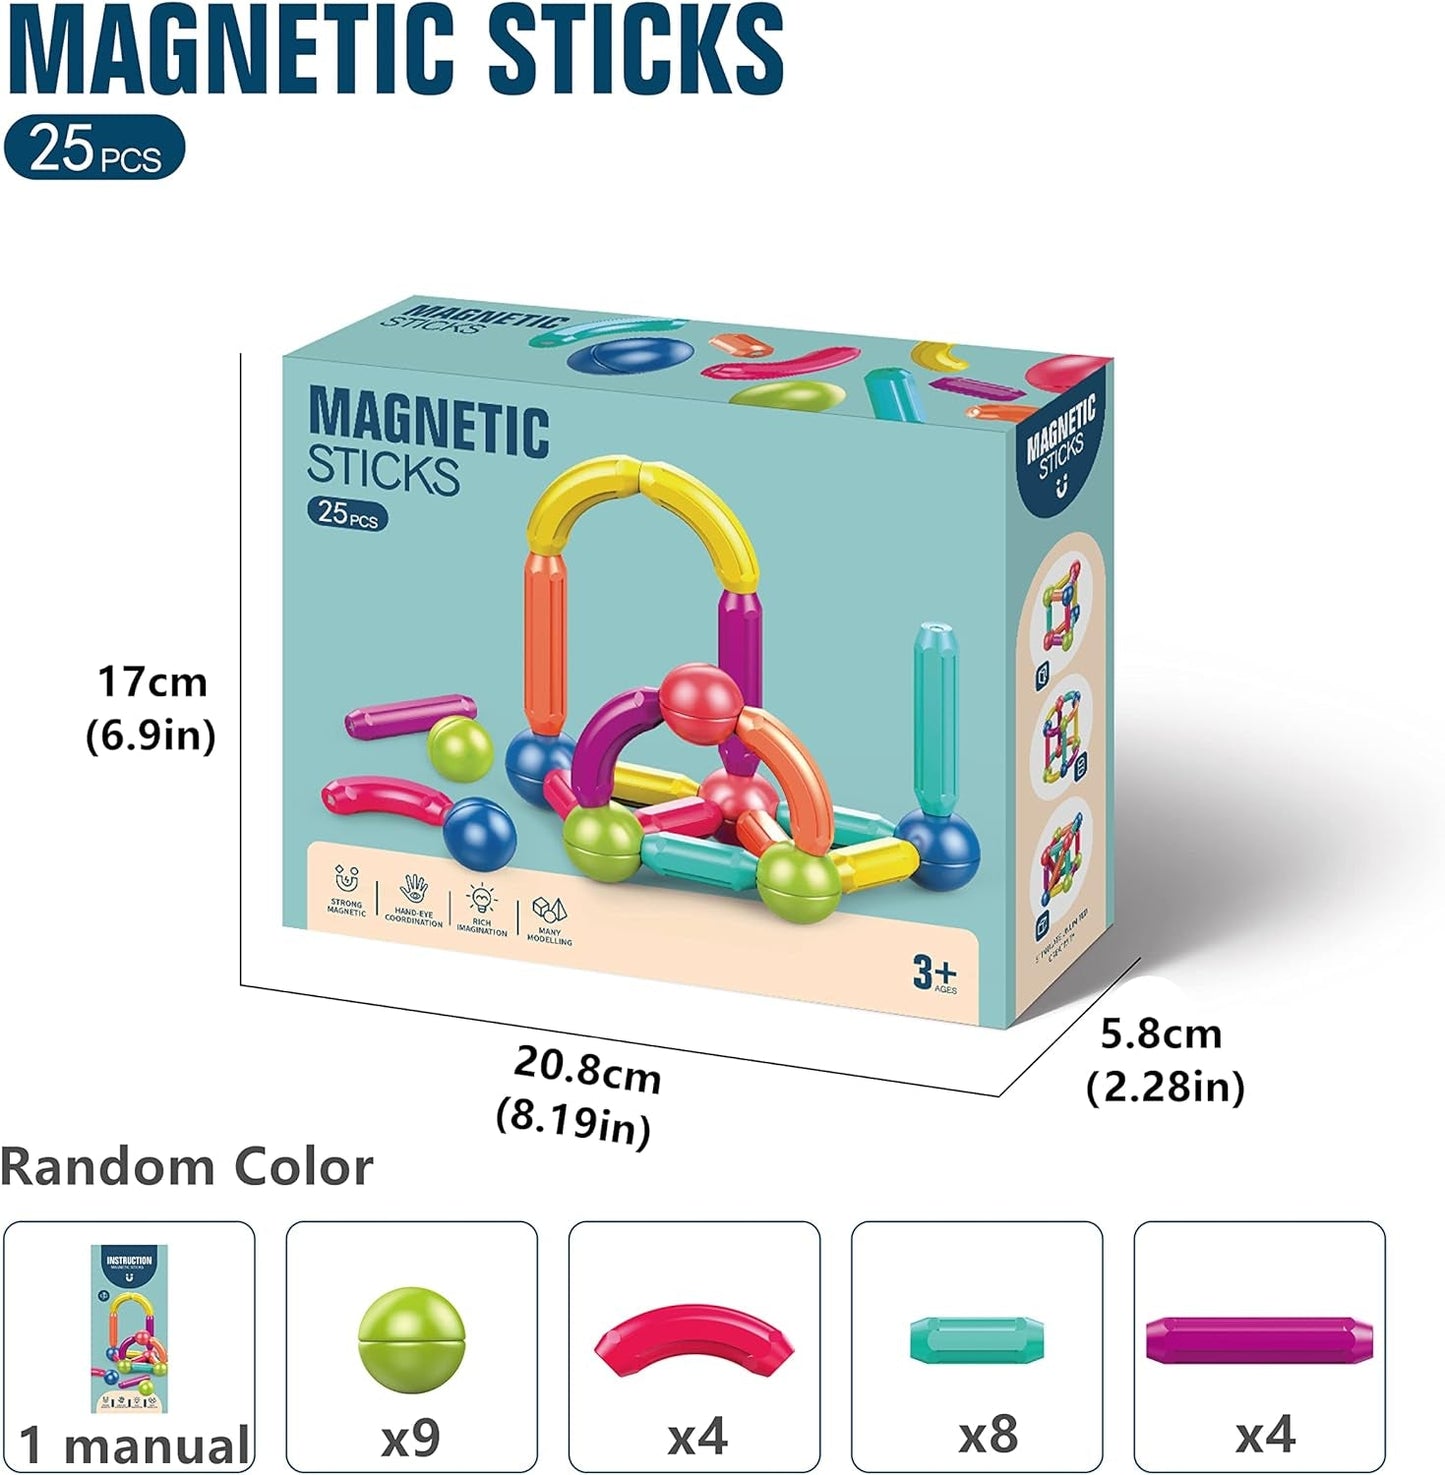 Magnetic Stick, Magnetic Balls and Rods Set, Building Sticks Blocks, Magnetic Blocks, STEM Stacking Magnetic Toys Magnet Educational Toys for Kids Boys and Girls (25 PCS)